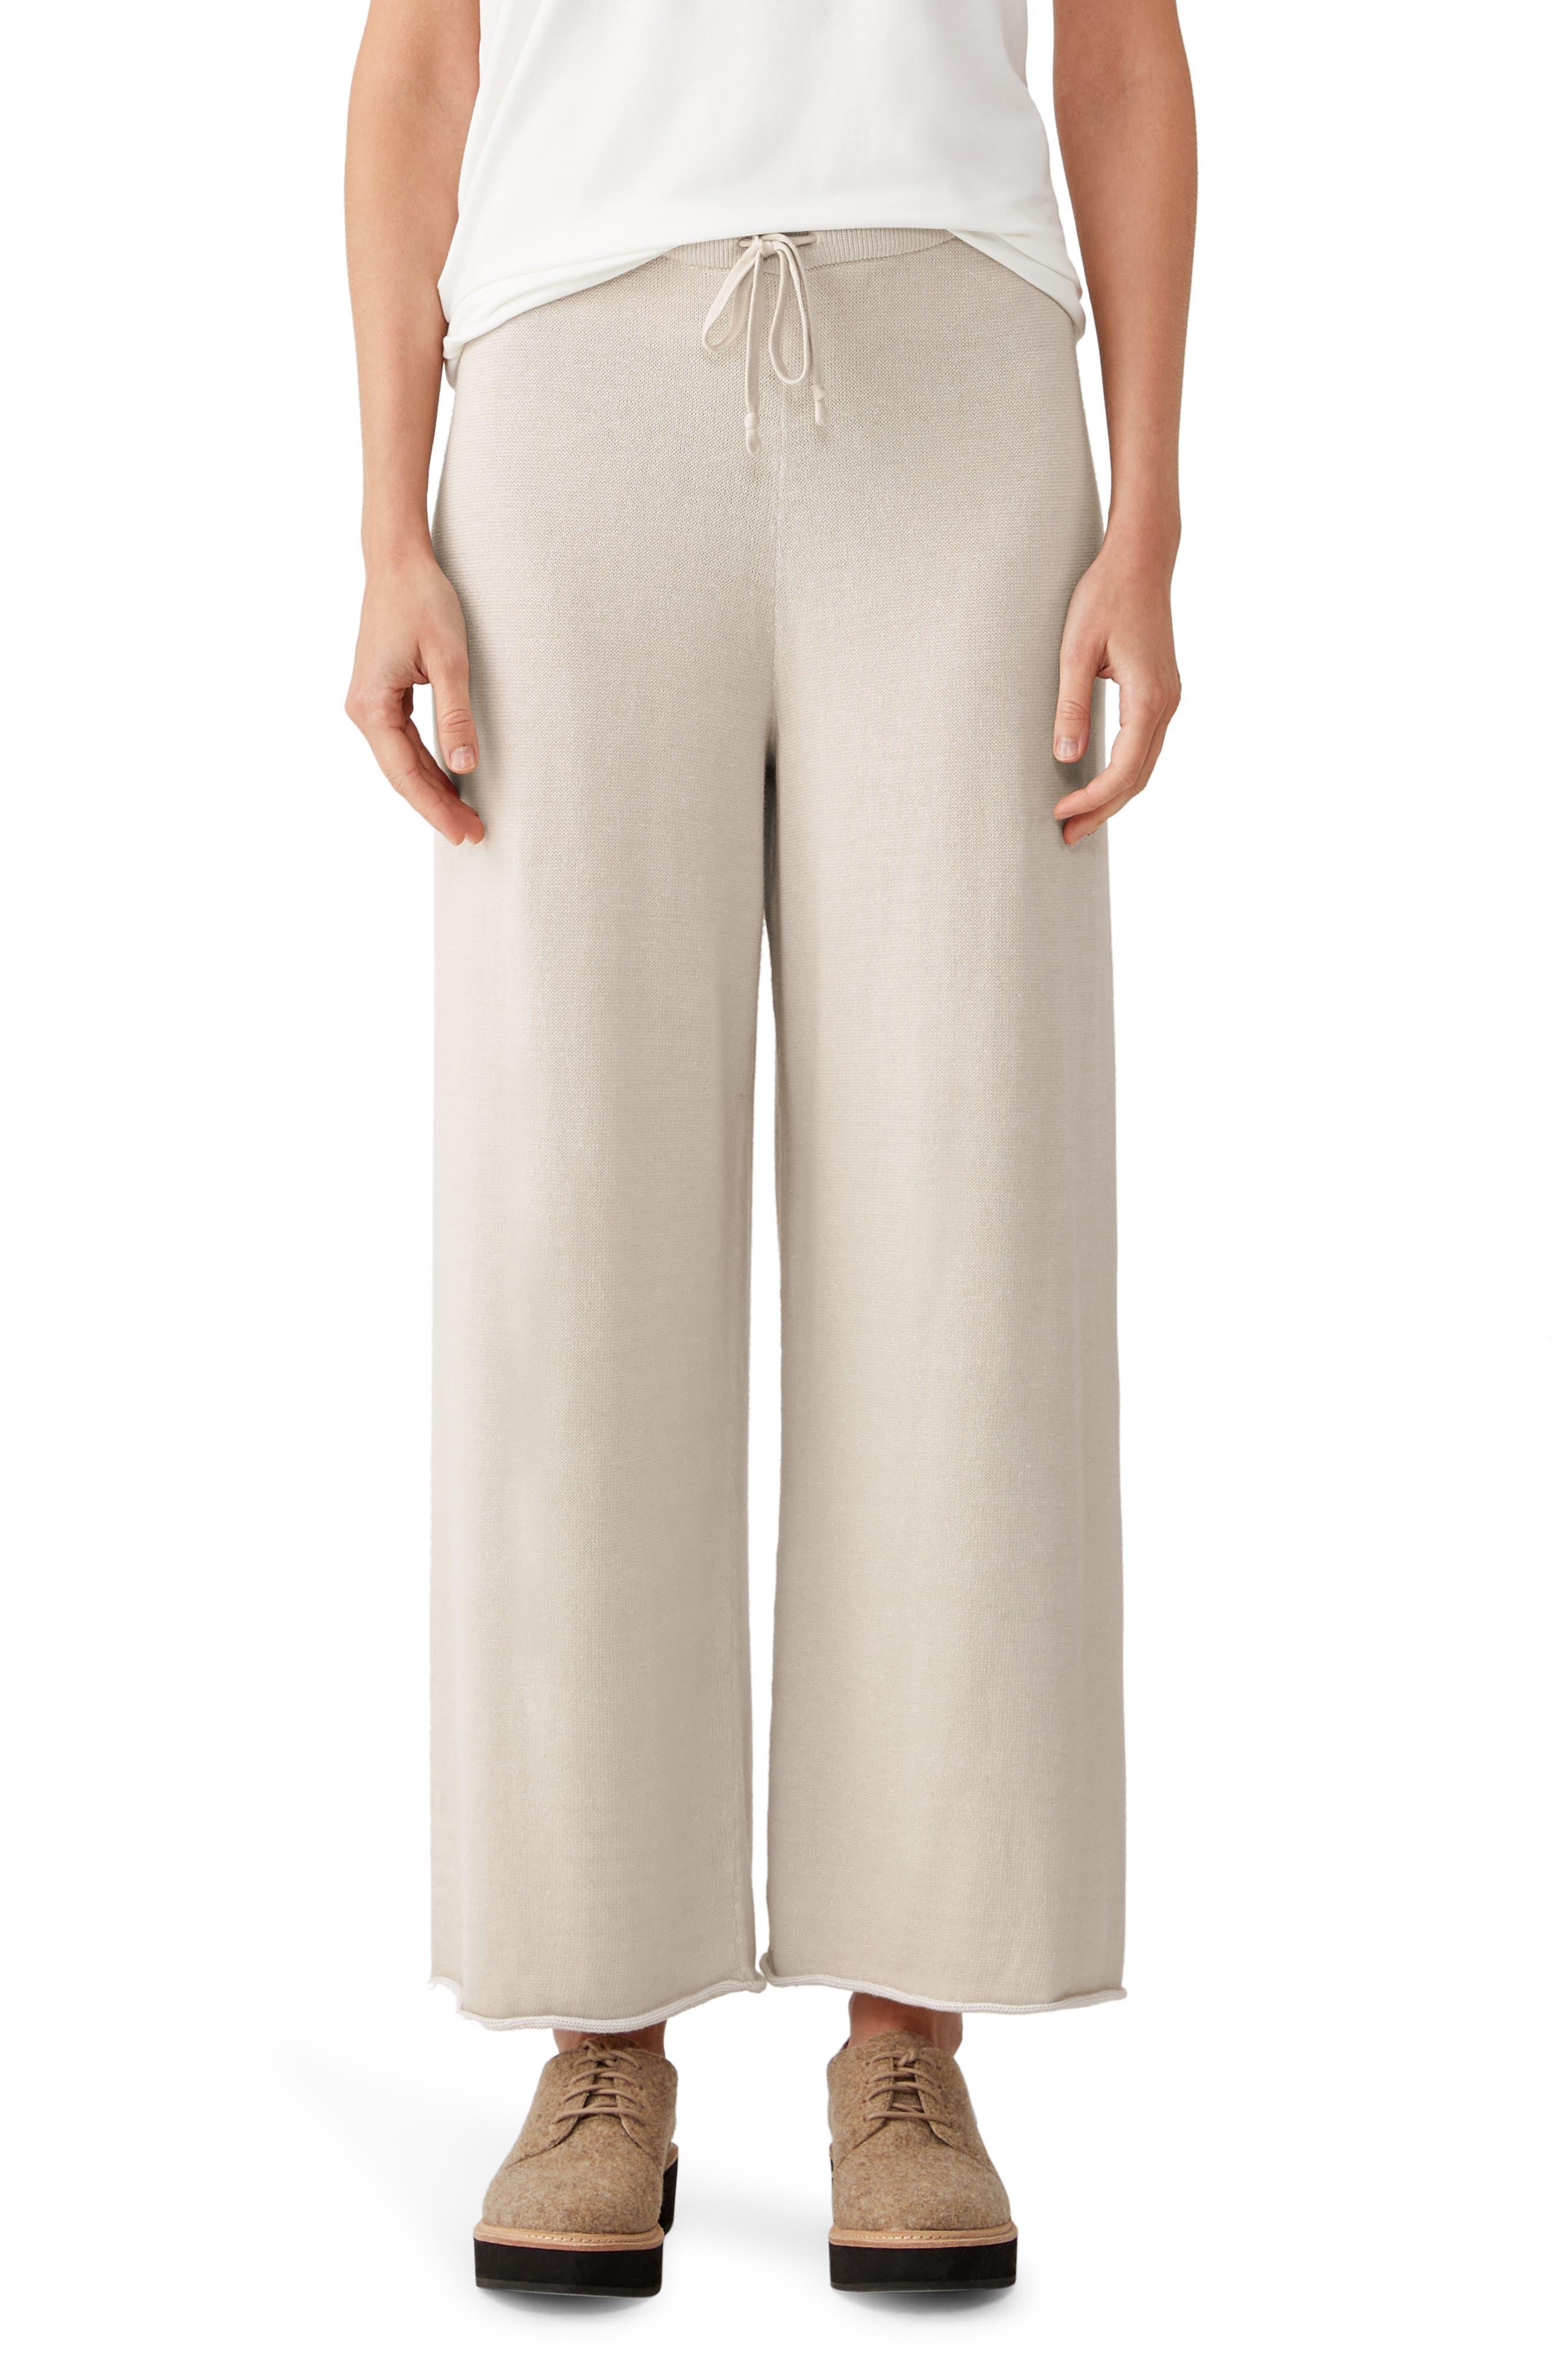 $228 Eileen Fisher Black Slim Pull On Cropped Pants Petite PP 